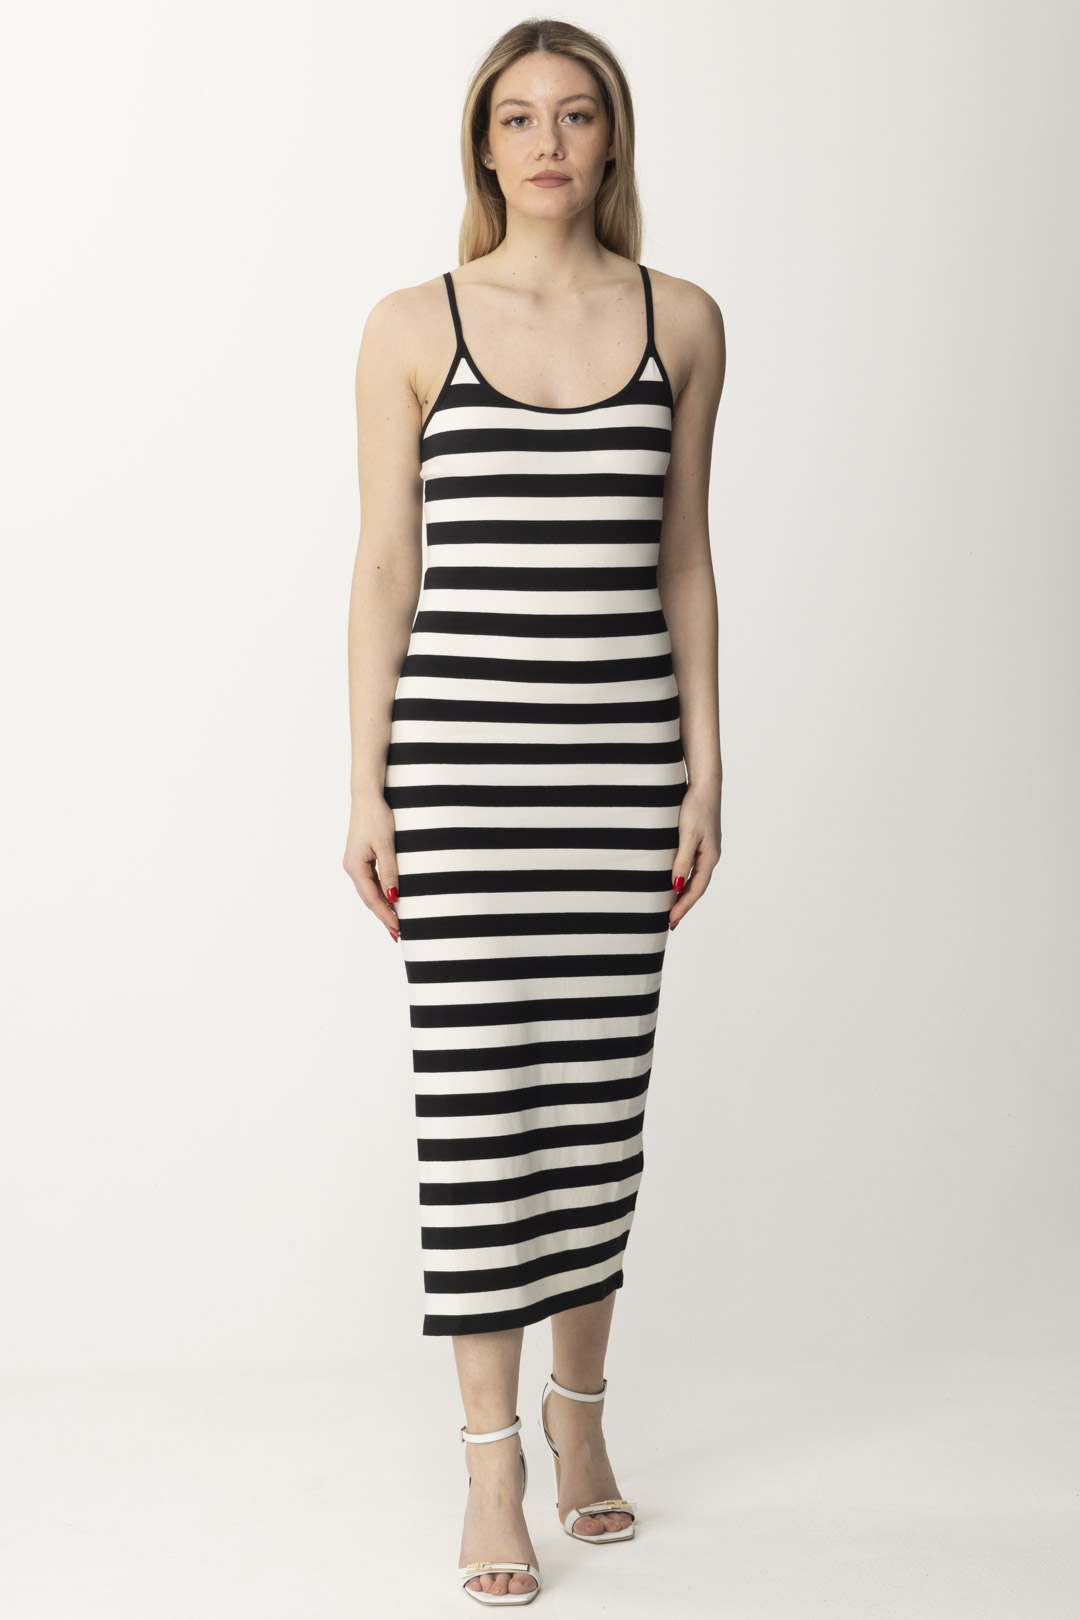 Vorschau: Patrizia Pepe Langes Kleid mit Streifendruck Black/White Stripes